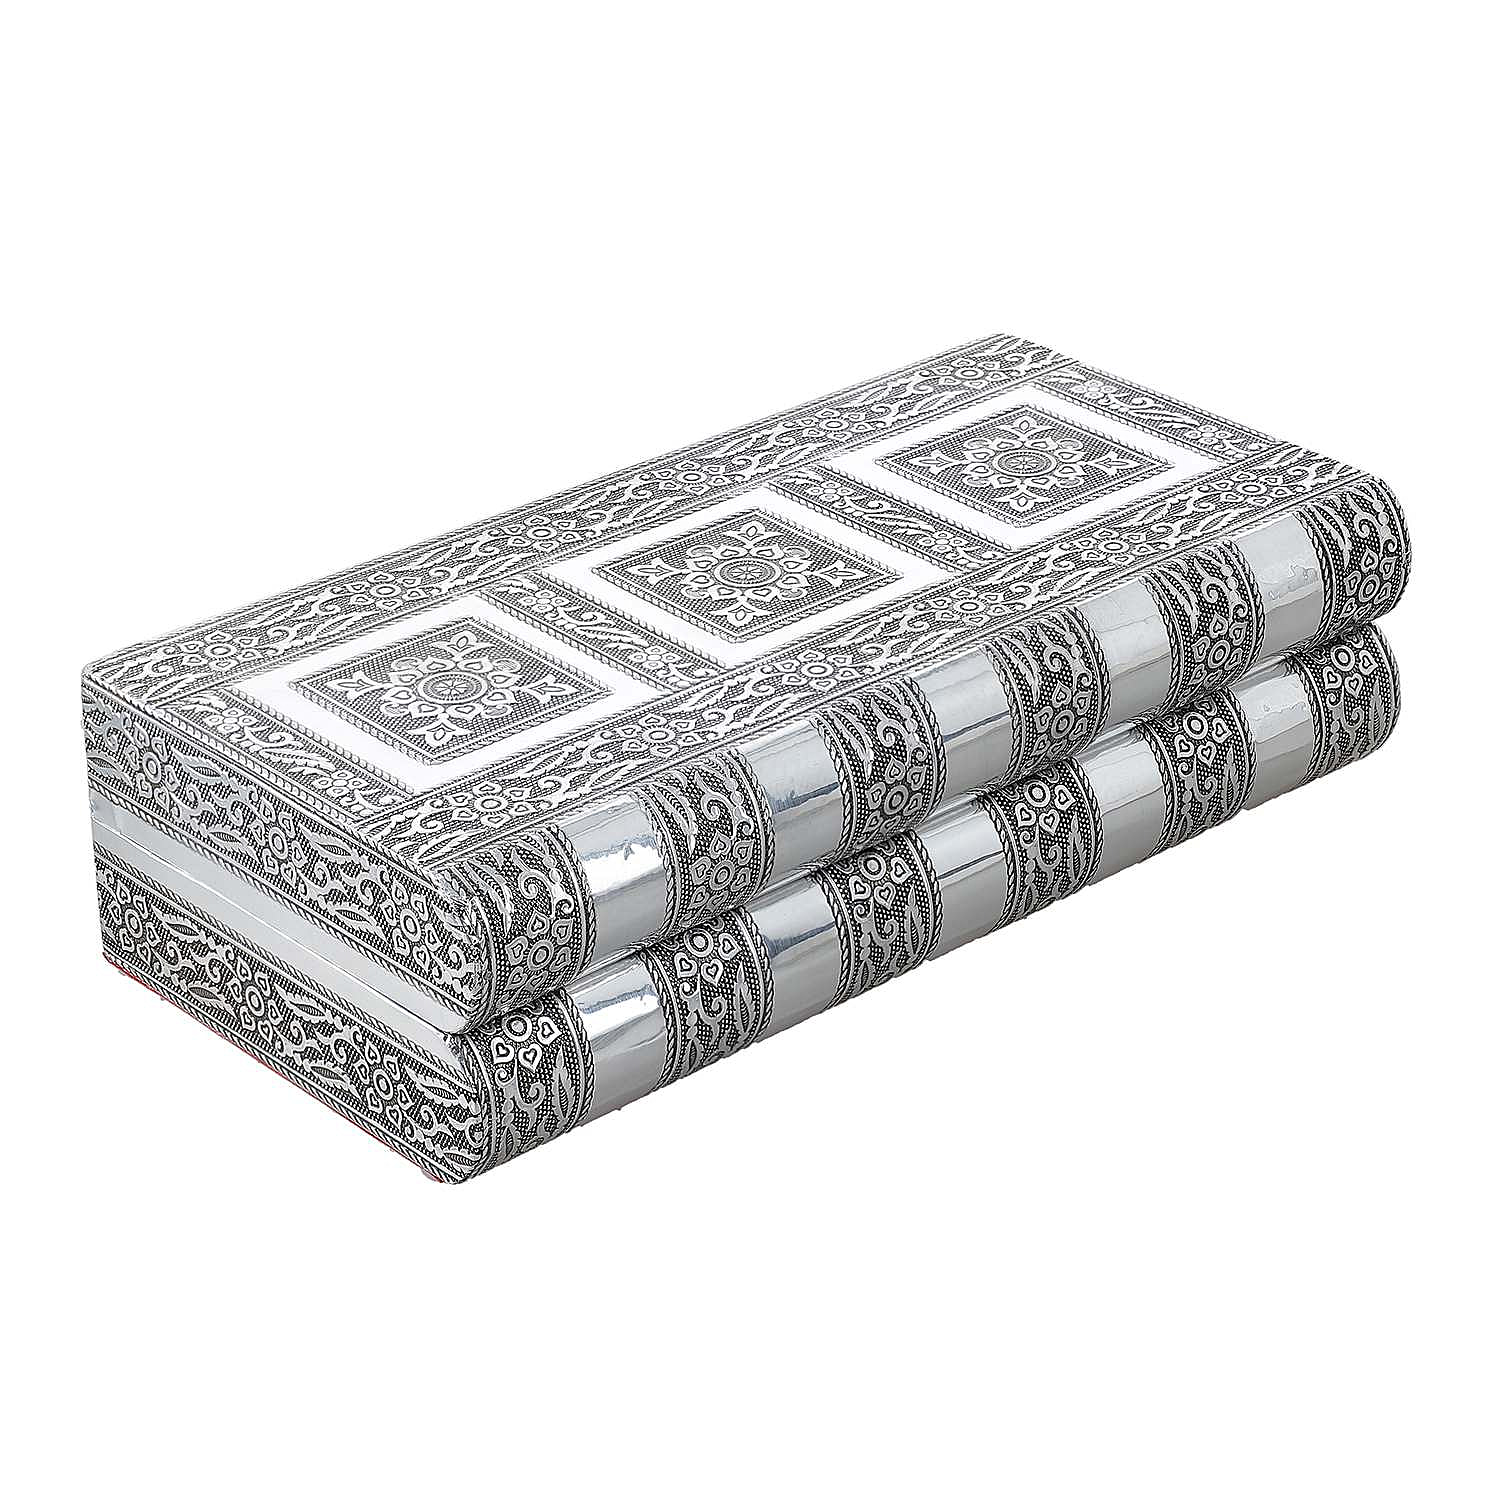 Handcrafted-Storage-Box-Size-13x27x8-cm-Silver-Silver